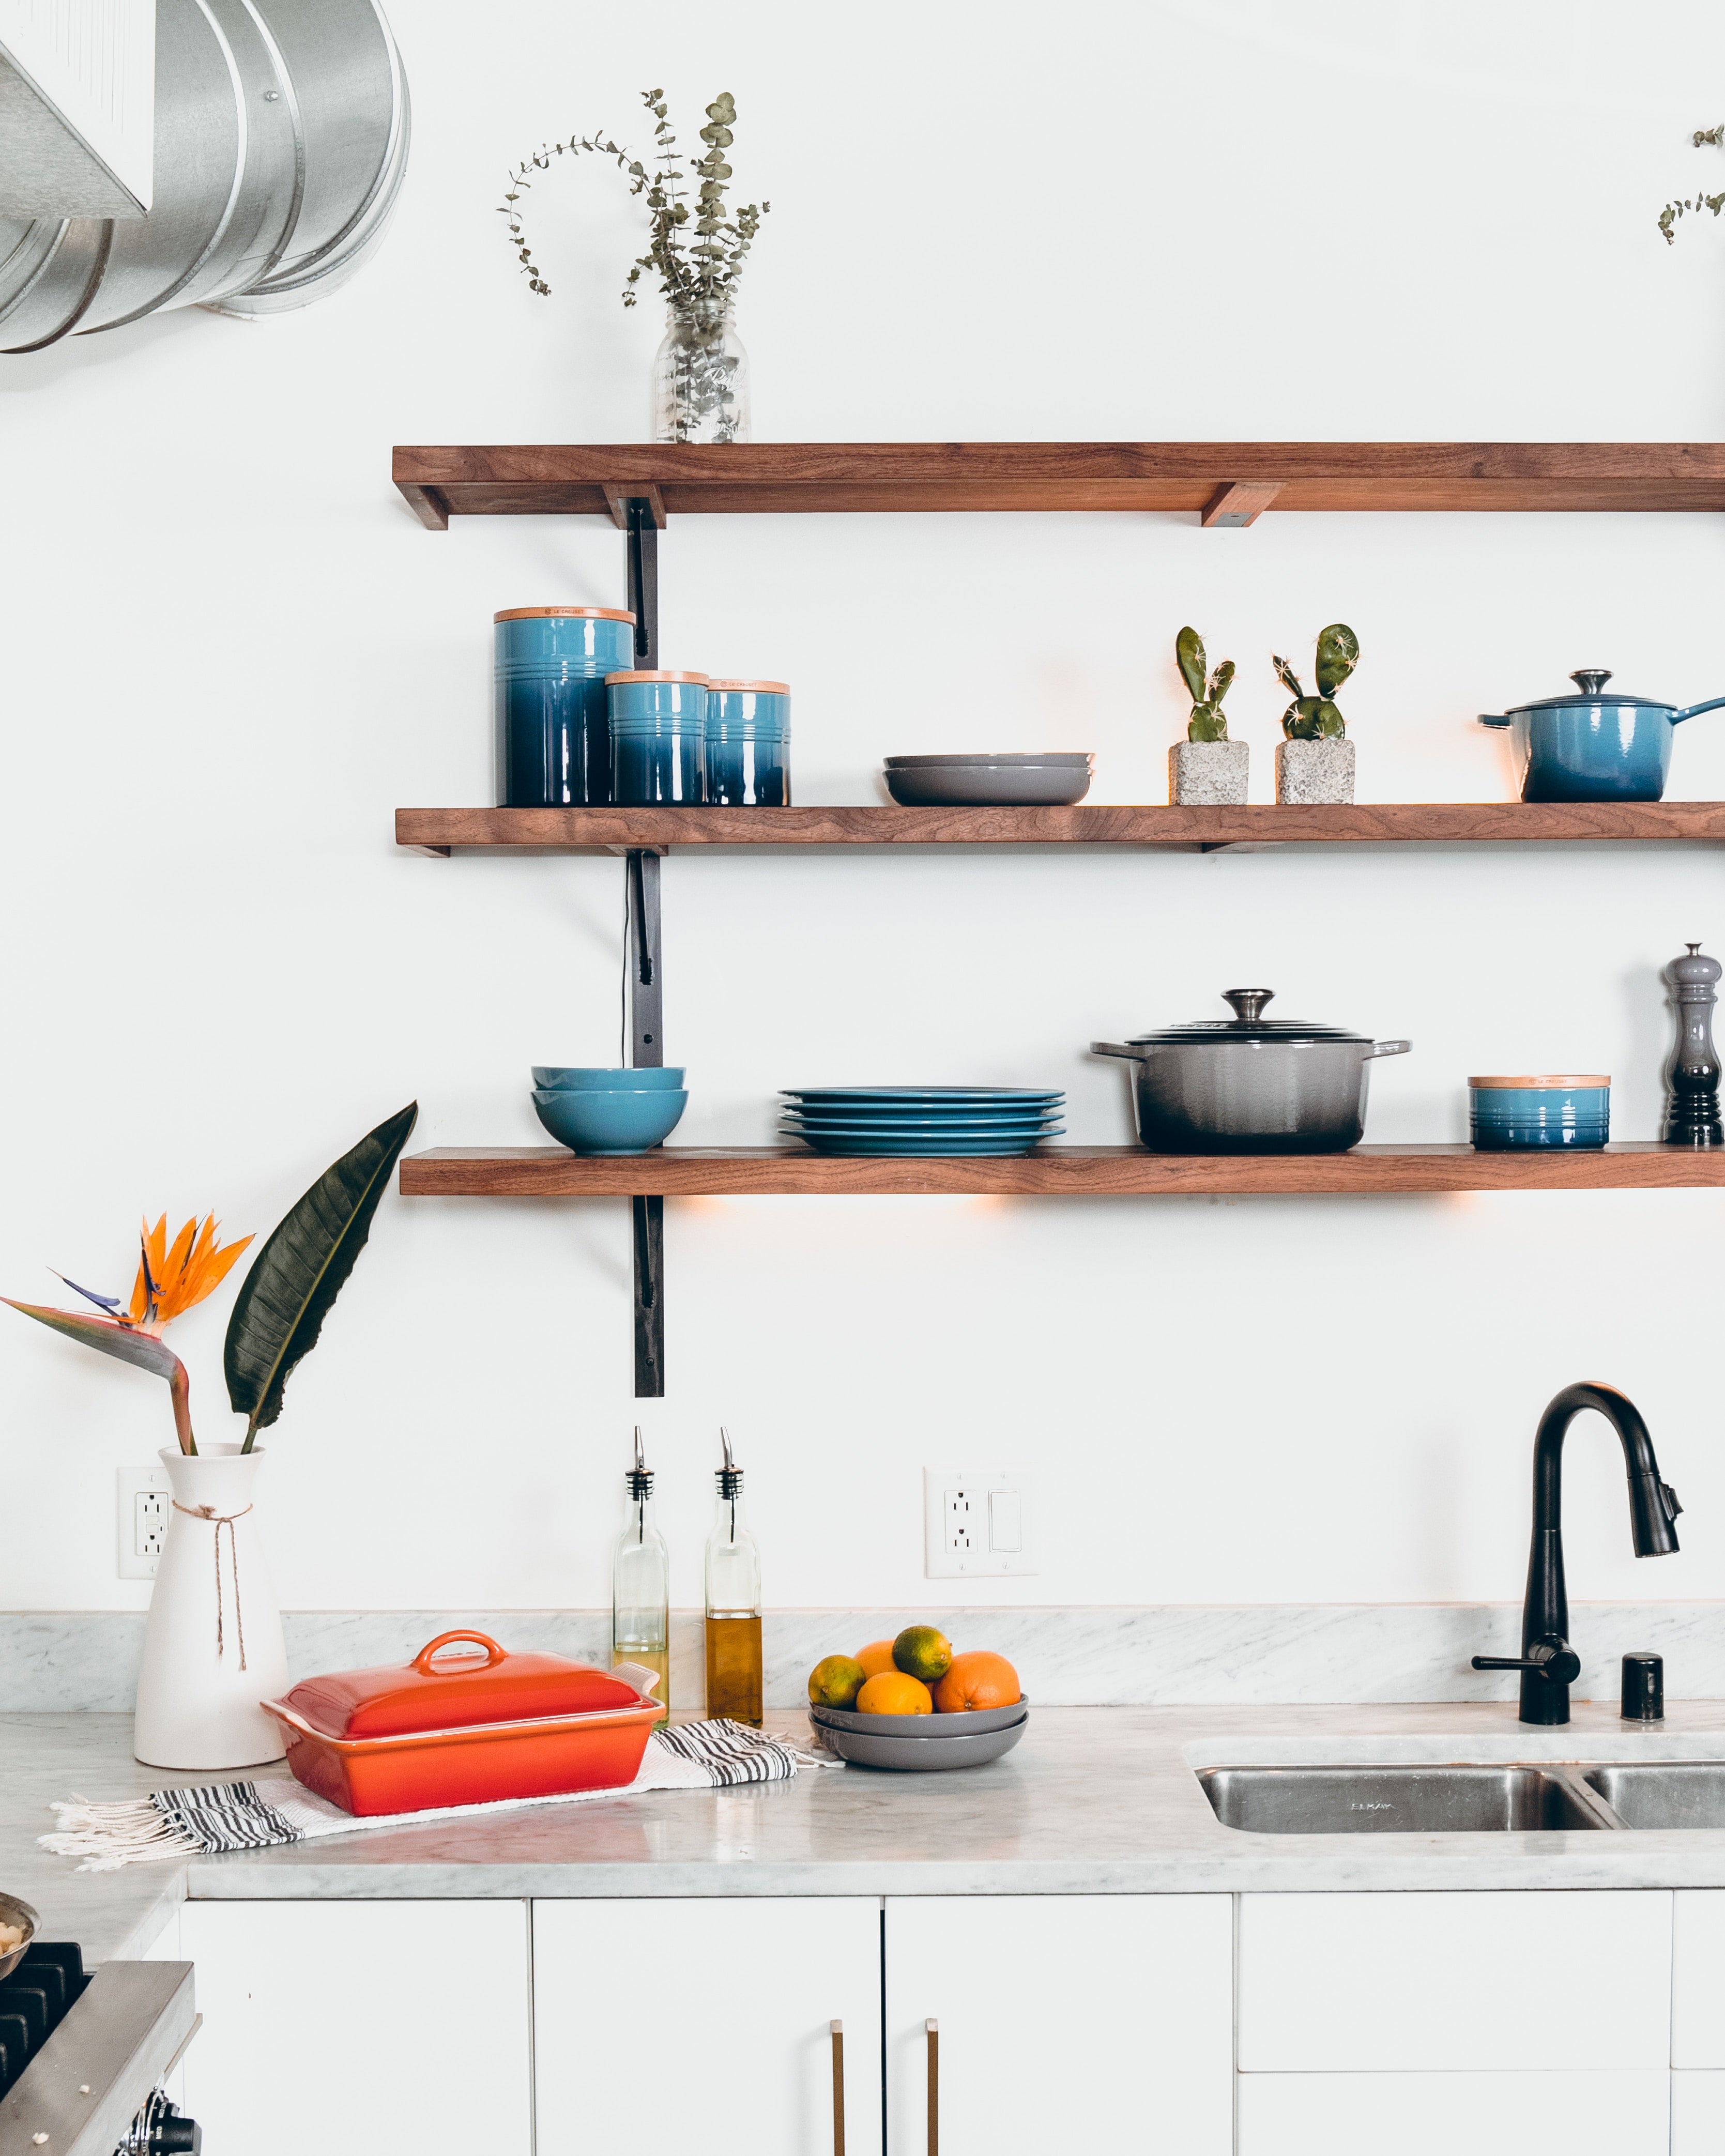 kitchen countertops worth spending on - renovation